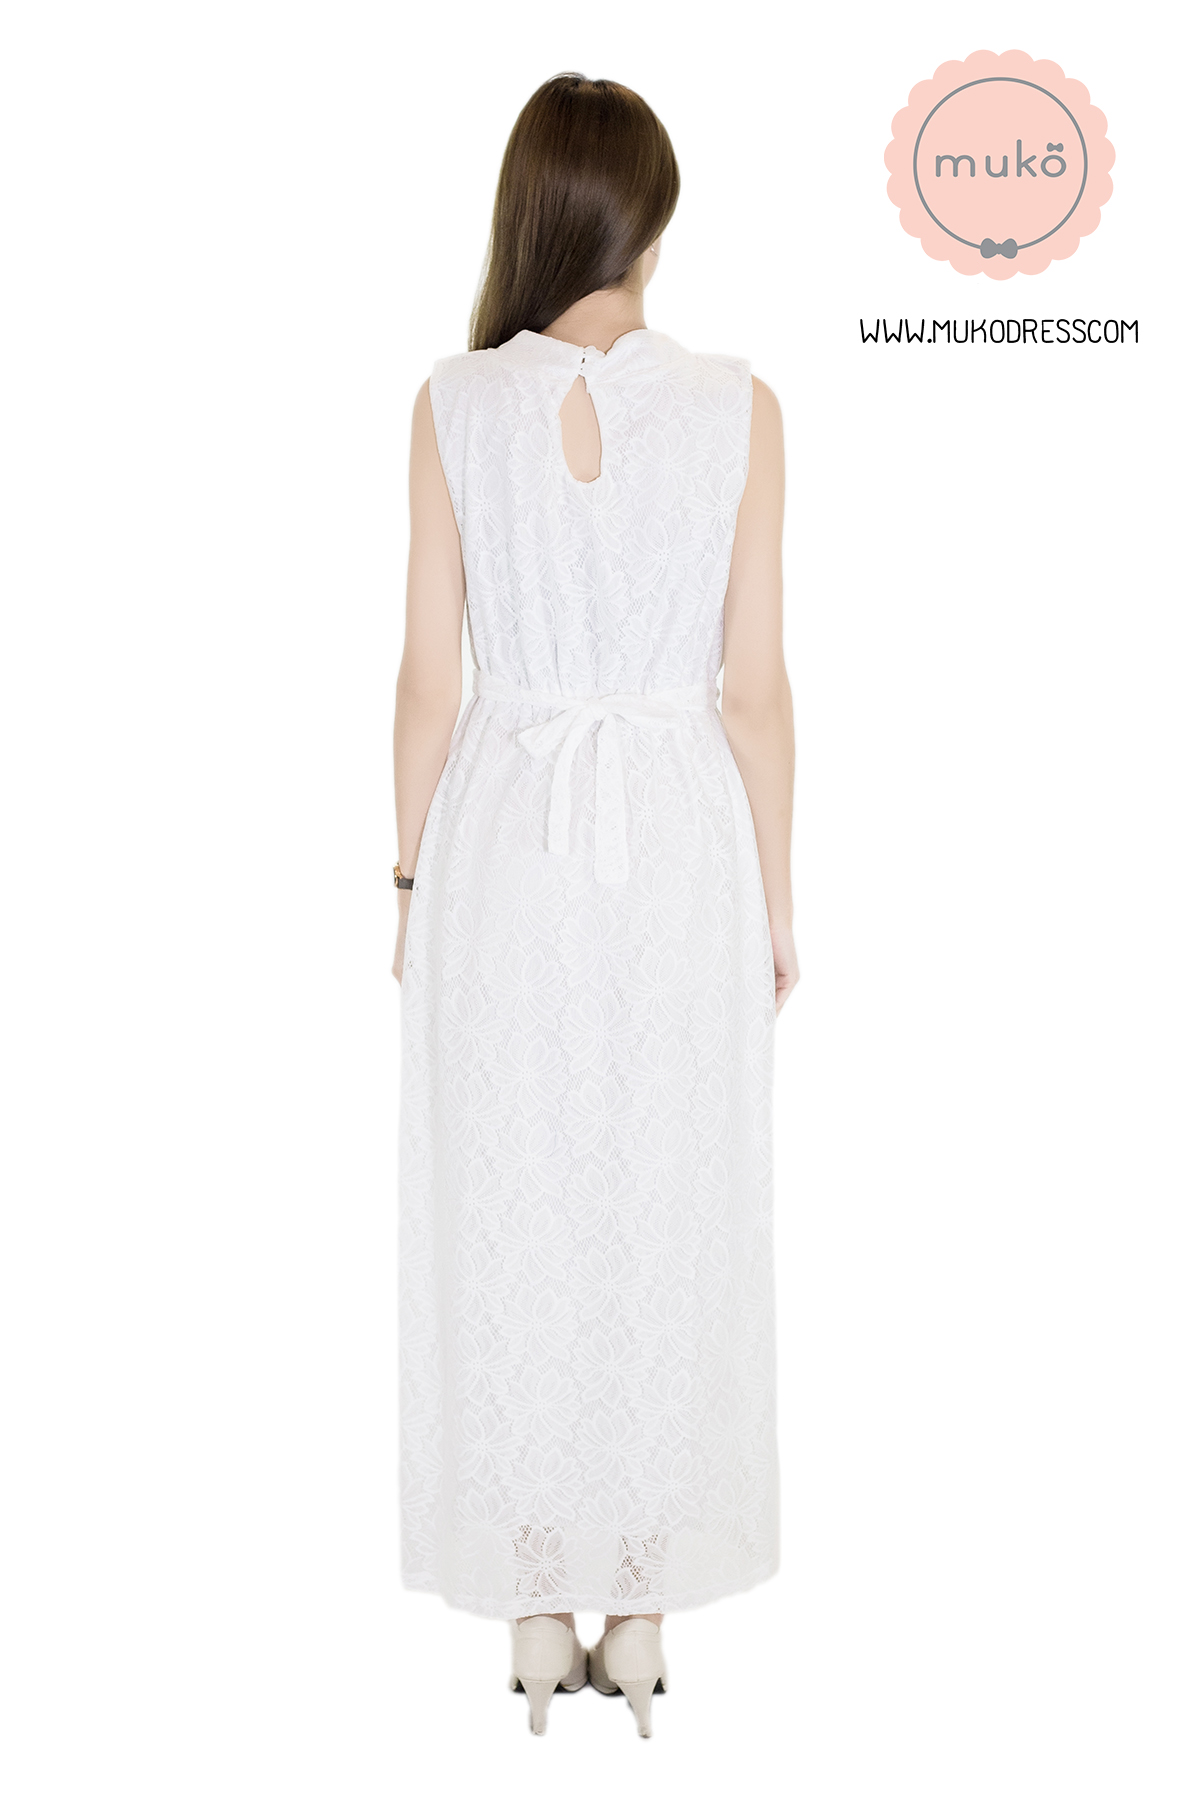 Muko Sarah Lace Dress เดรสเปิดให้นม คลุมท้อง MZ04-006  ขาว